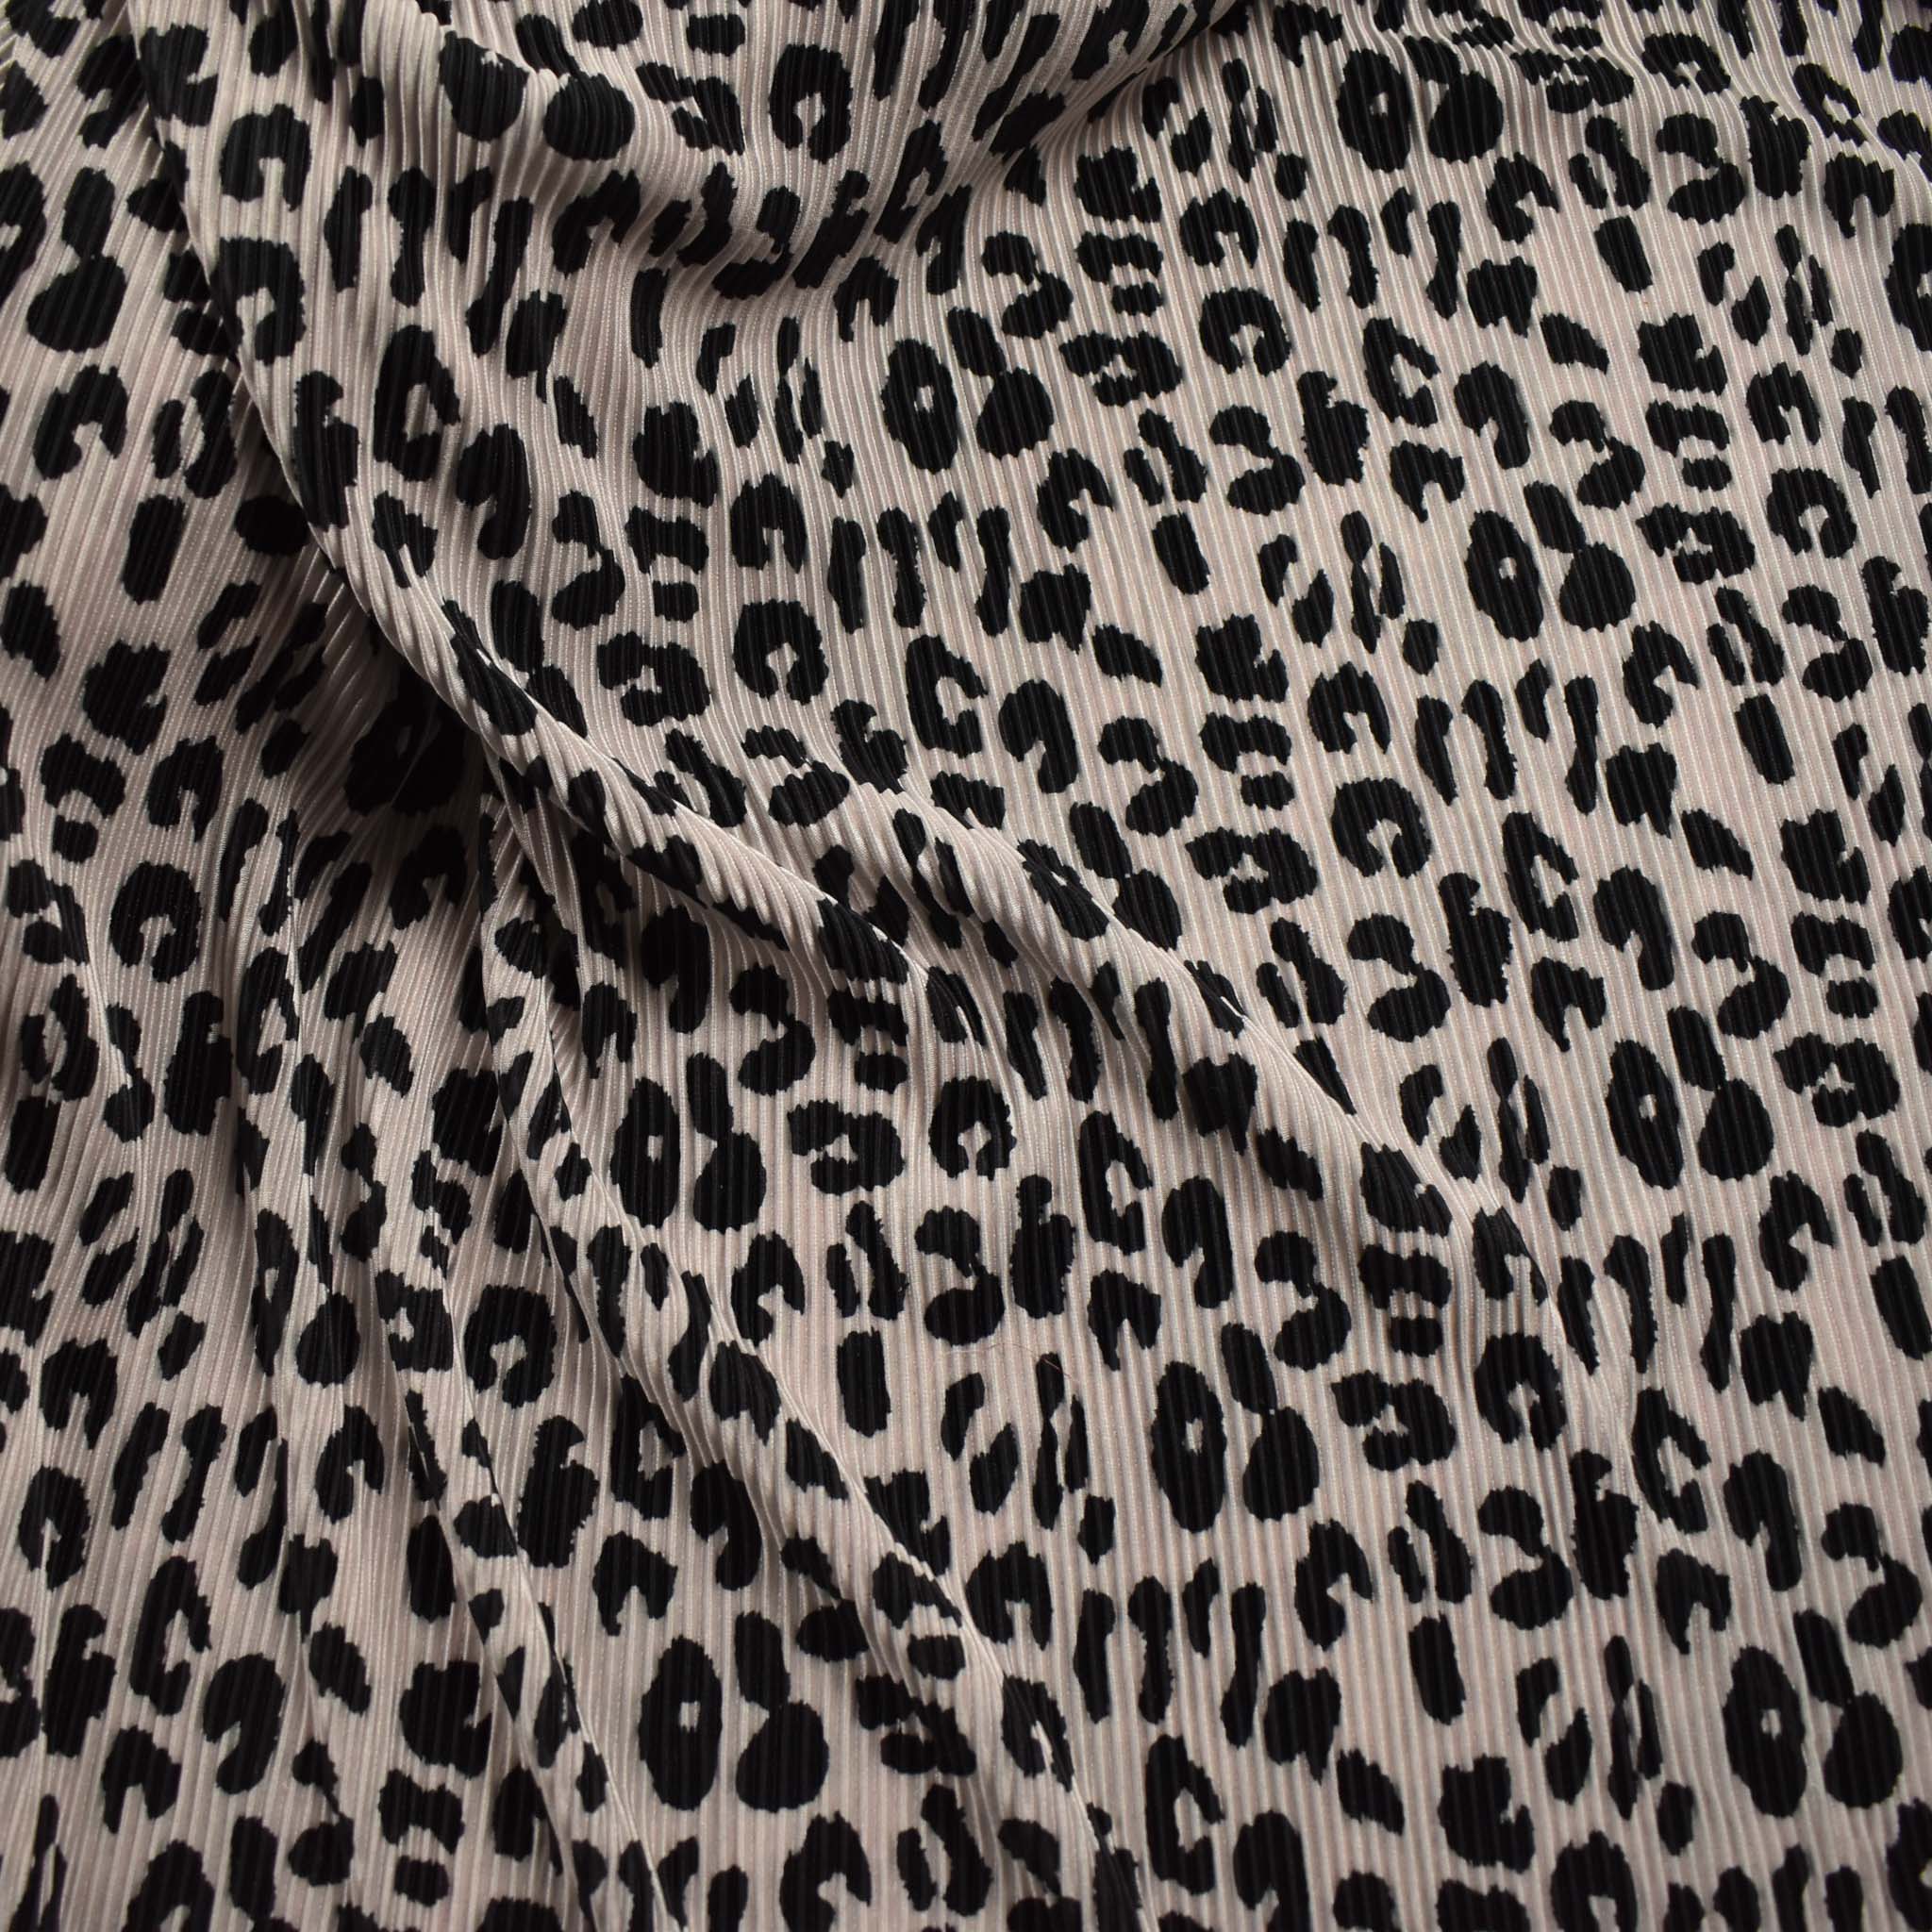 Blue Grey Off White Cheetah Animal Print Upholstery Fabric